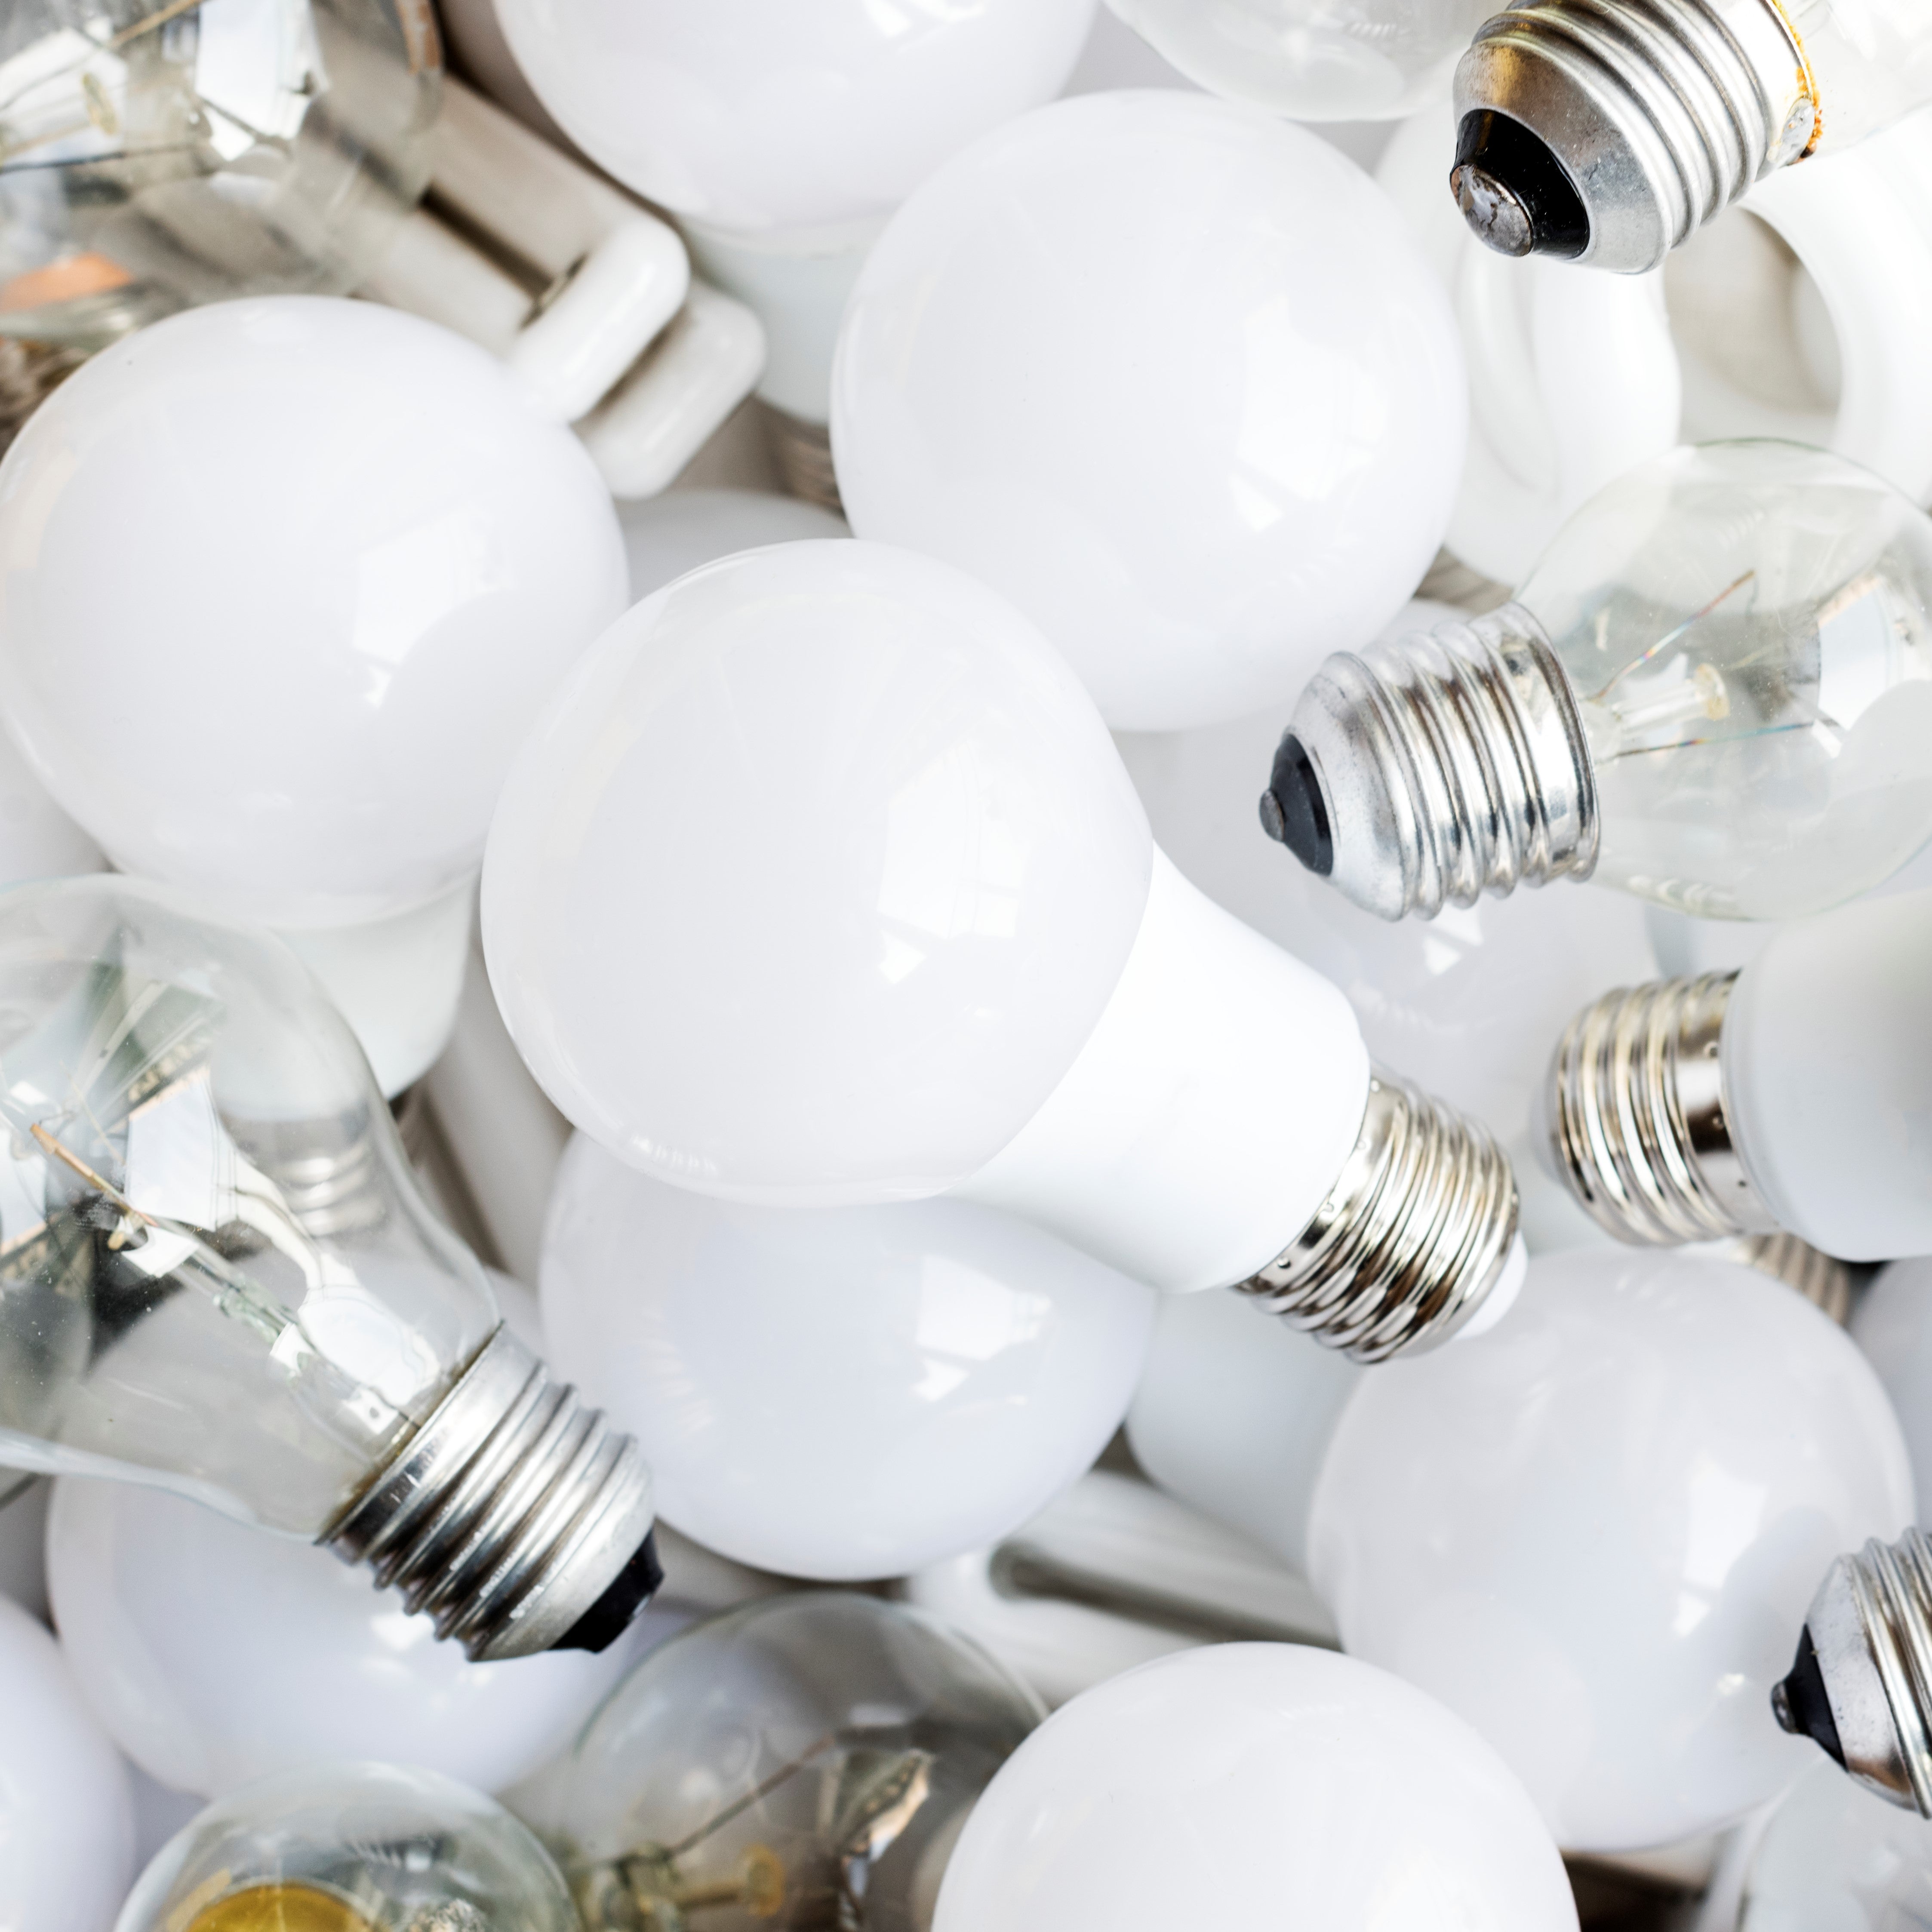 Ampoules basse consommation : le recyclage progresse